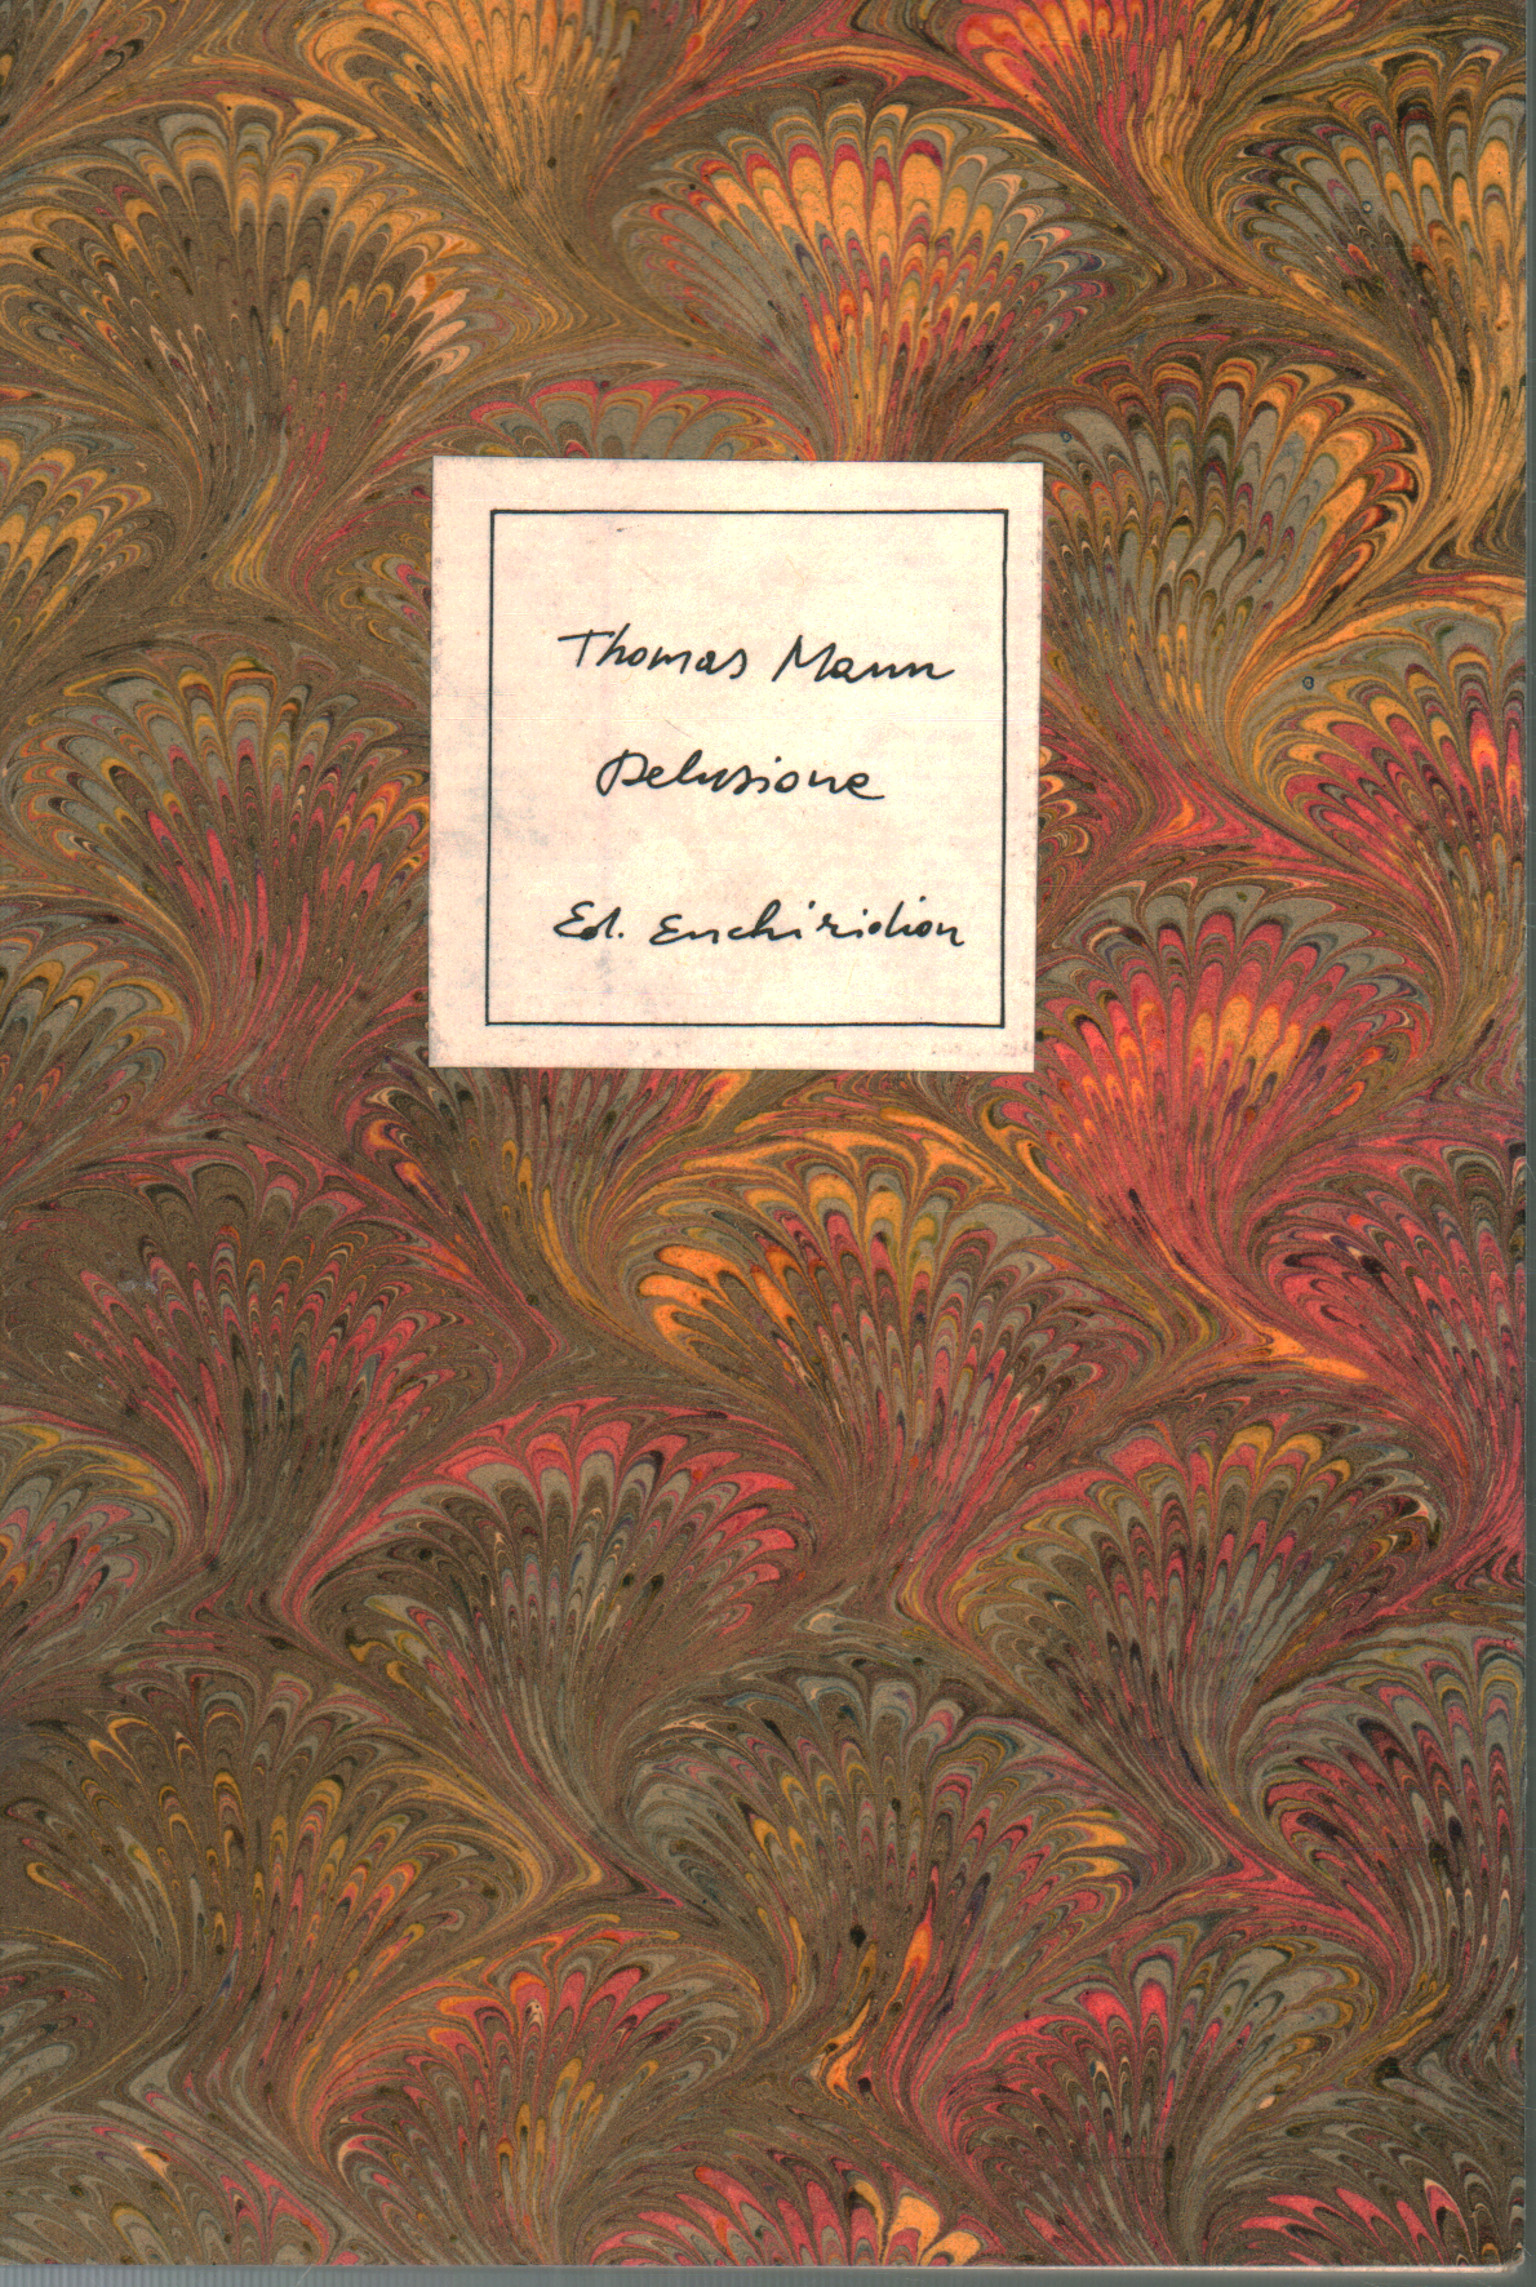 Delusione, Thomas Mann